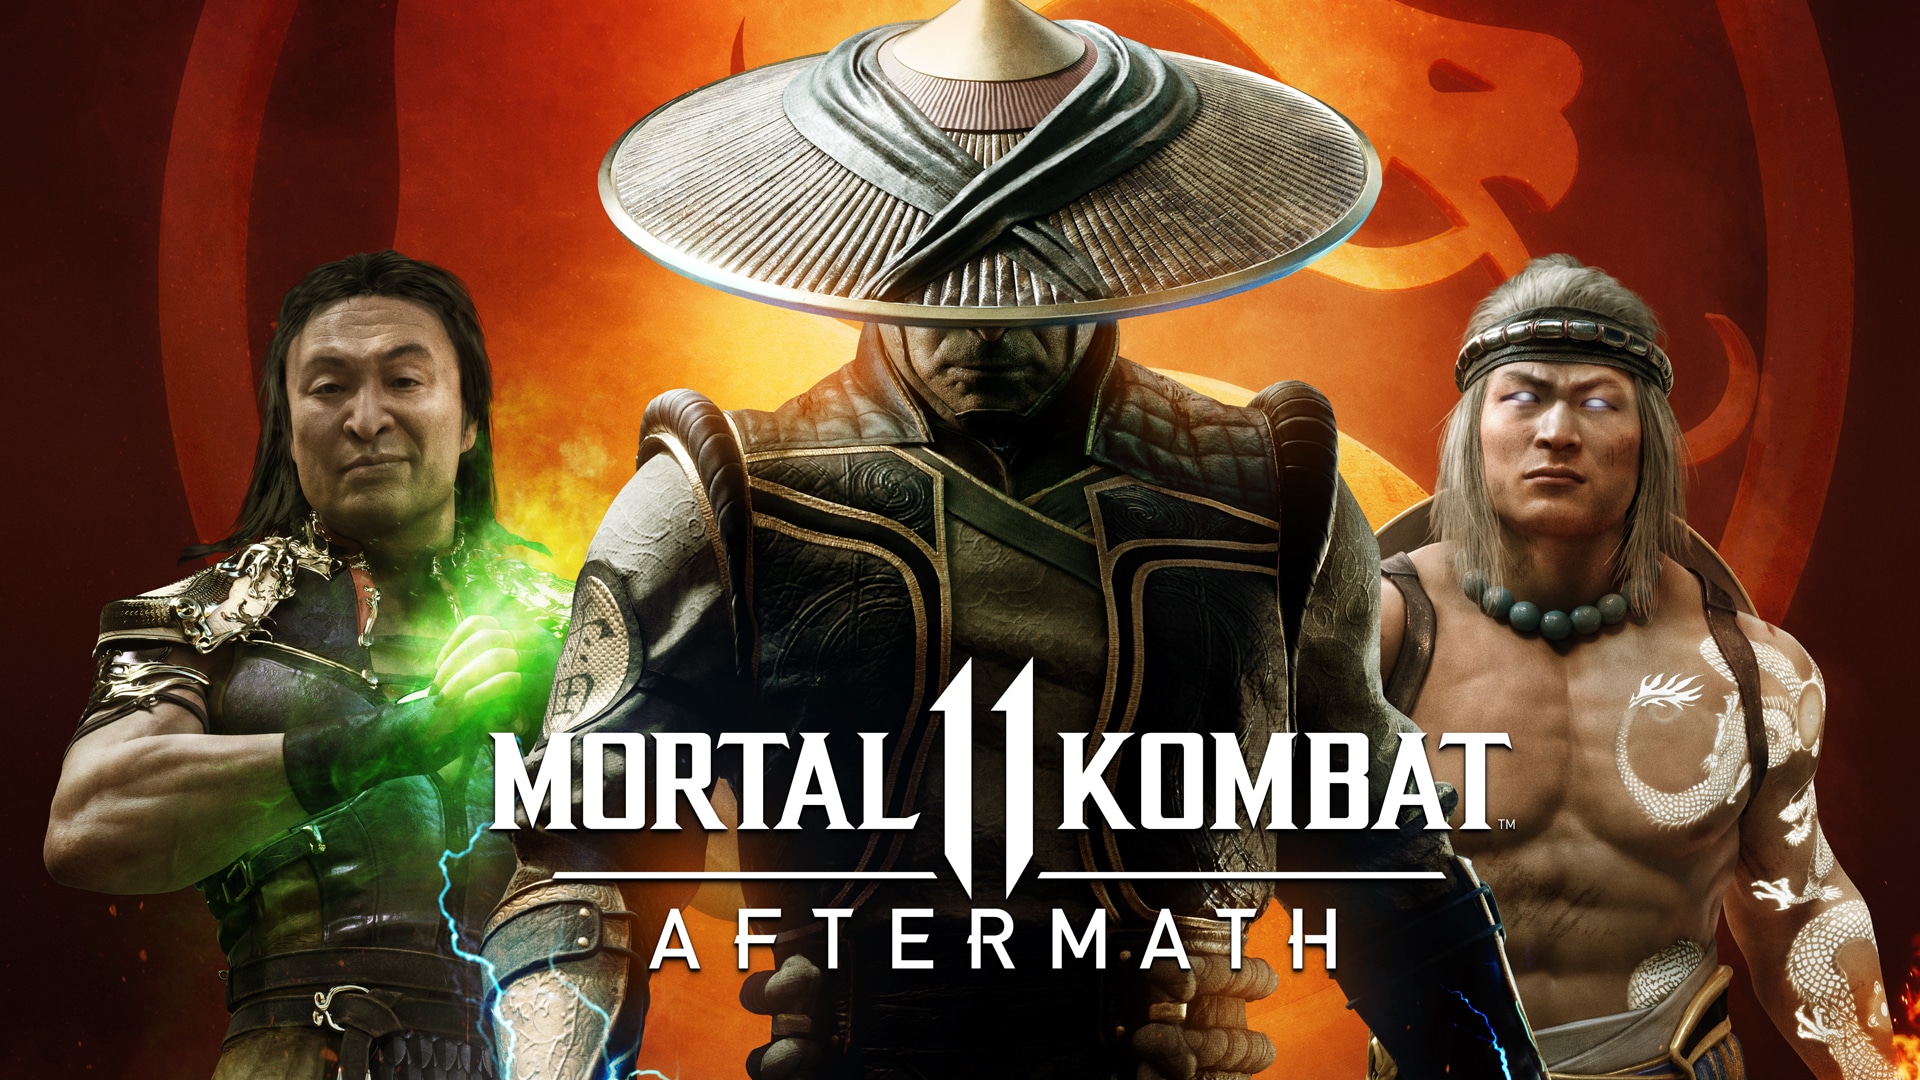 Mortal Kombat 11 – Aftermath, annunciata ufficialmente l’espansione